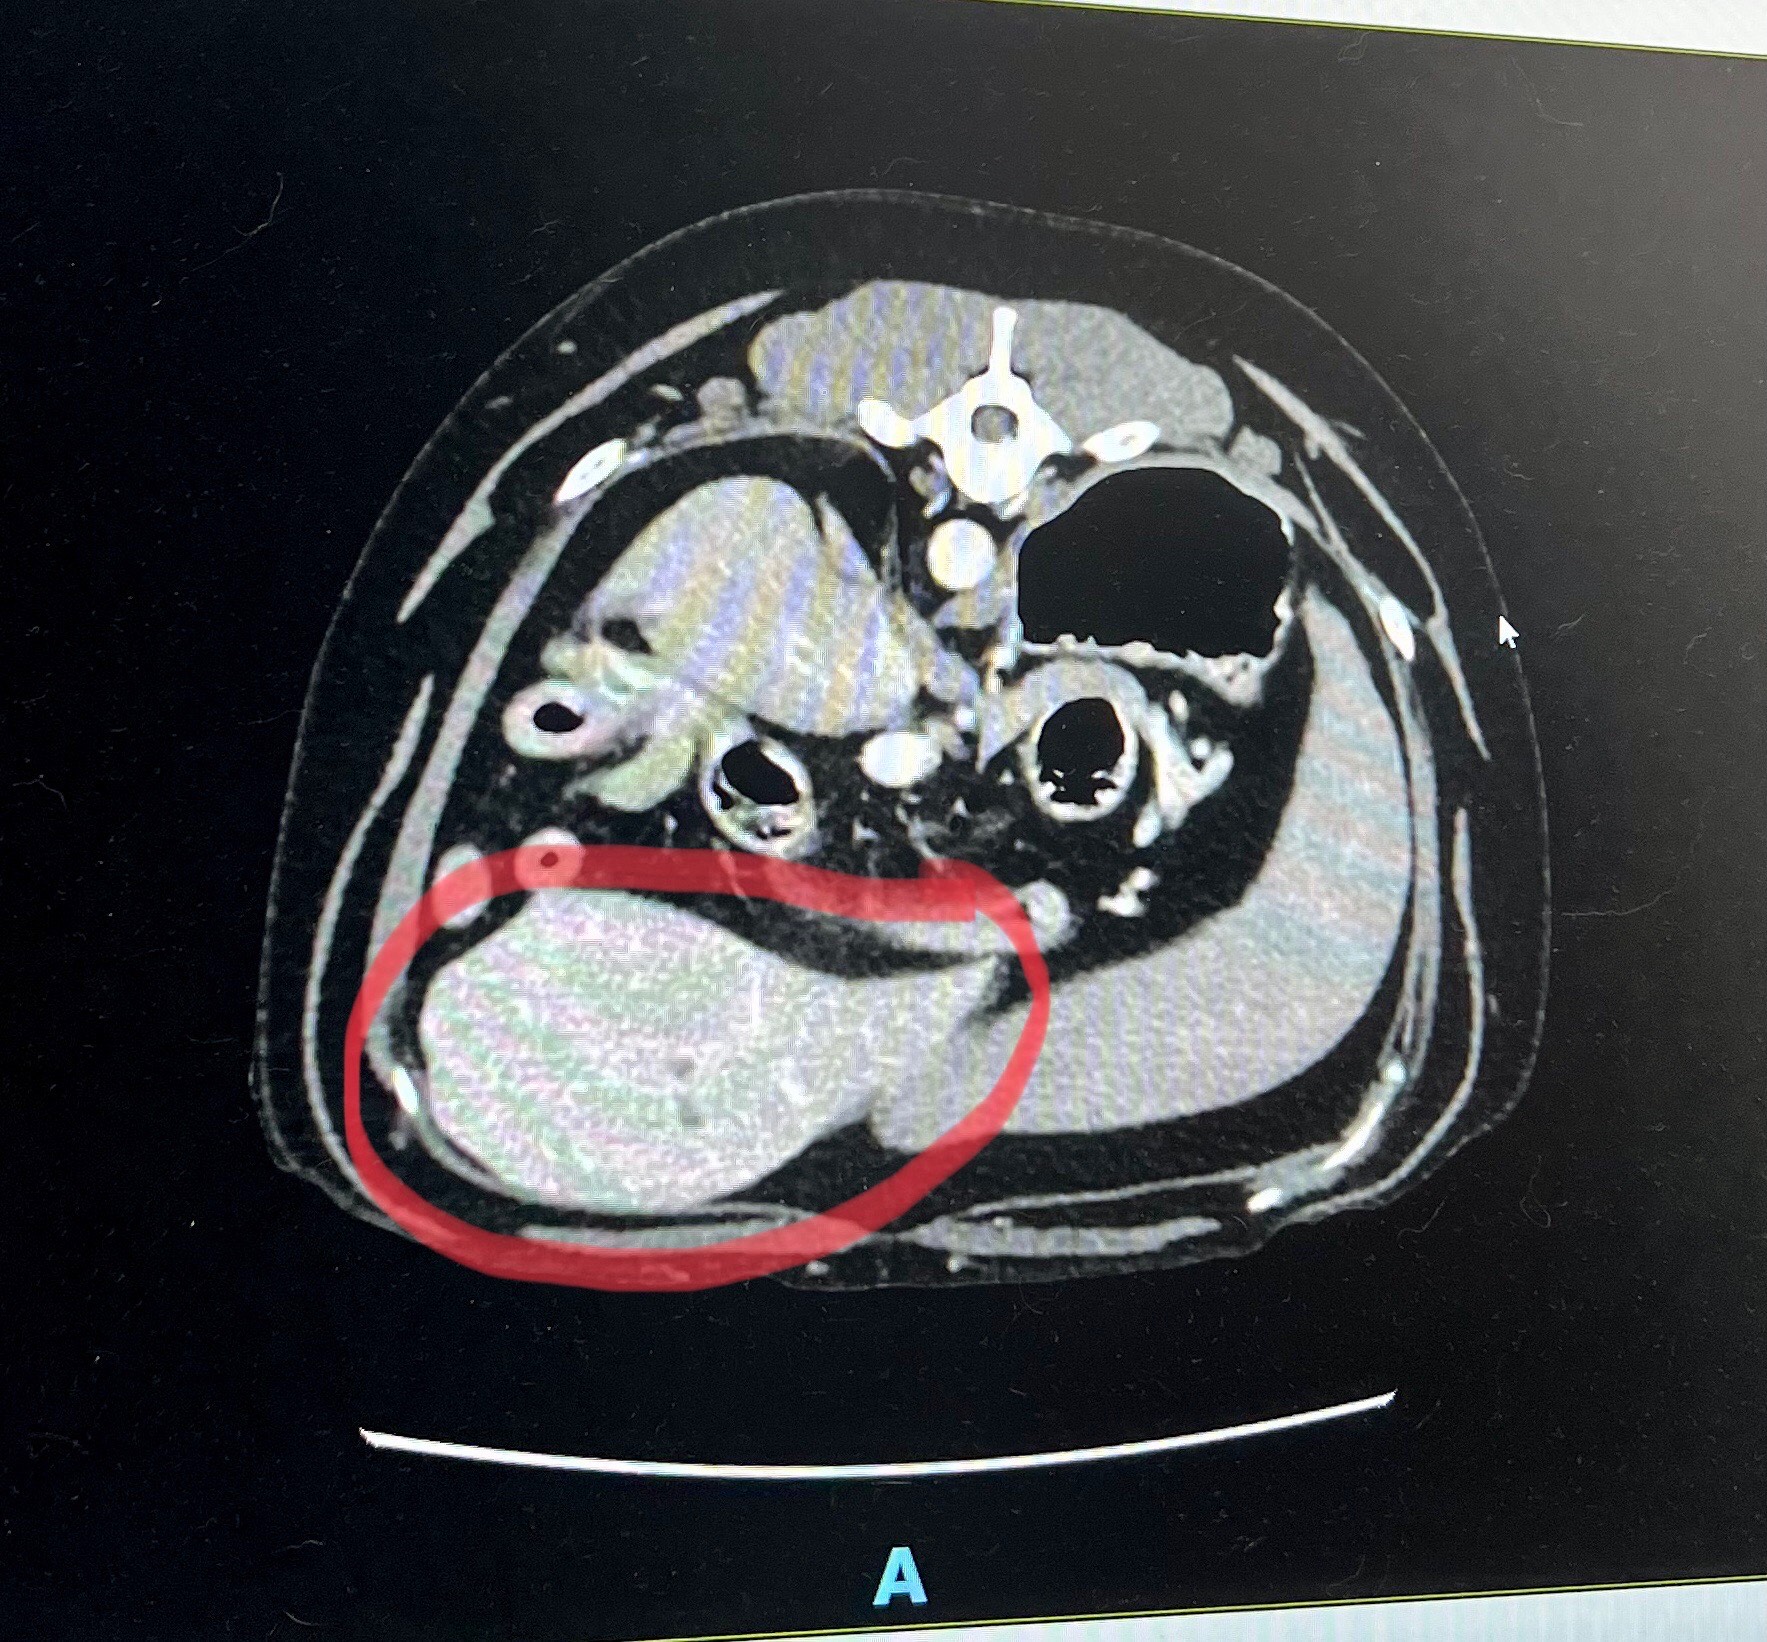 Nemo's CT scan